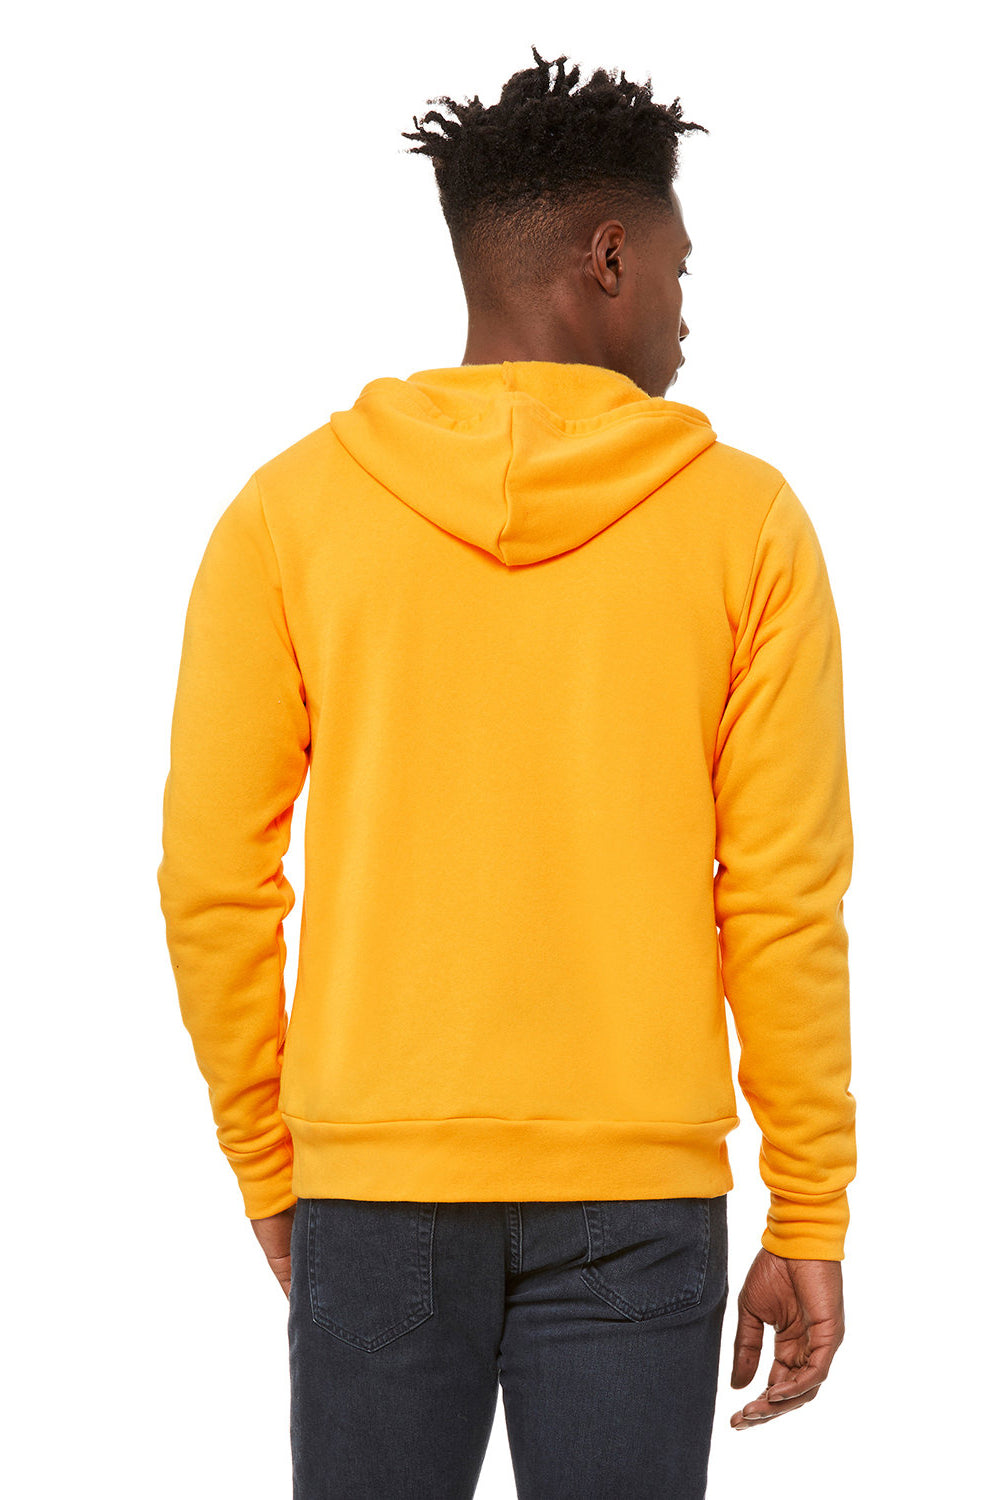 Bella + Canvas BC3739/3739 Mens Fleece Full Zip Hooded Sweatshirt Hoodie Gold Model Back